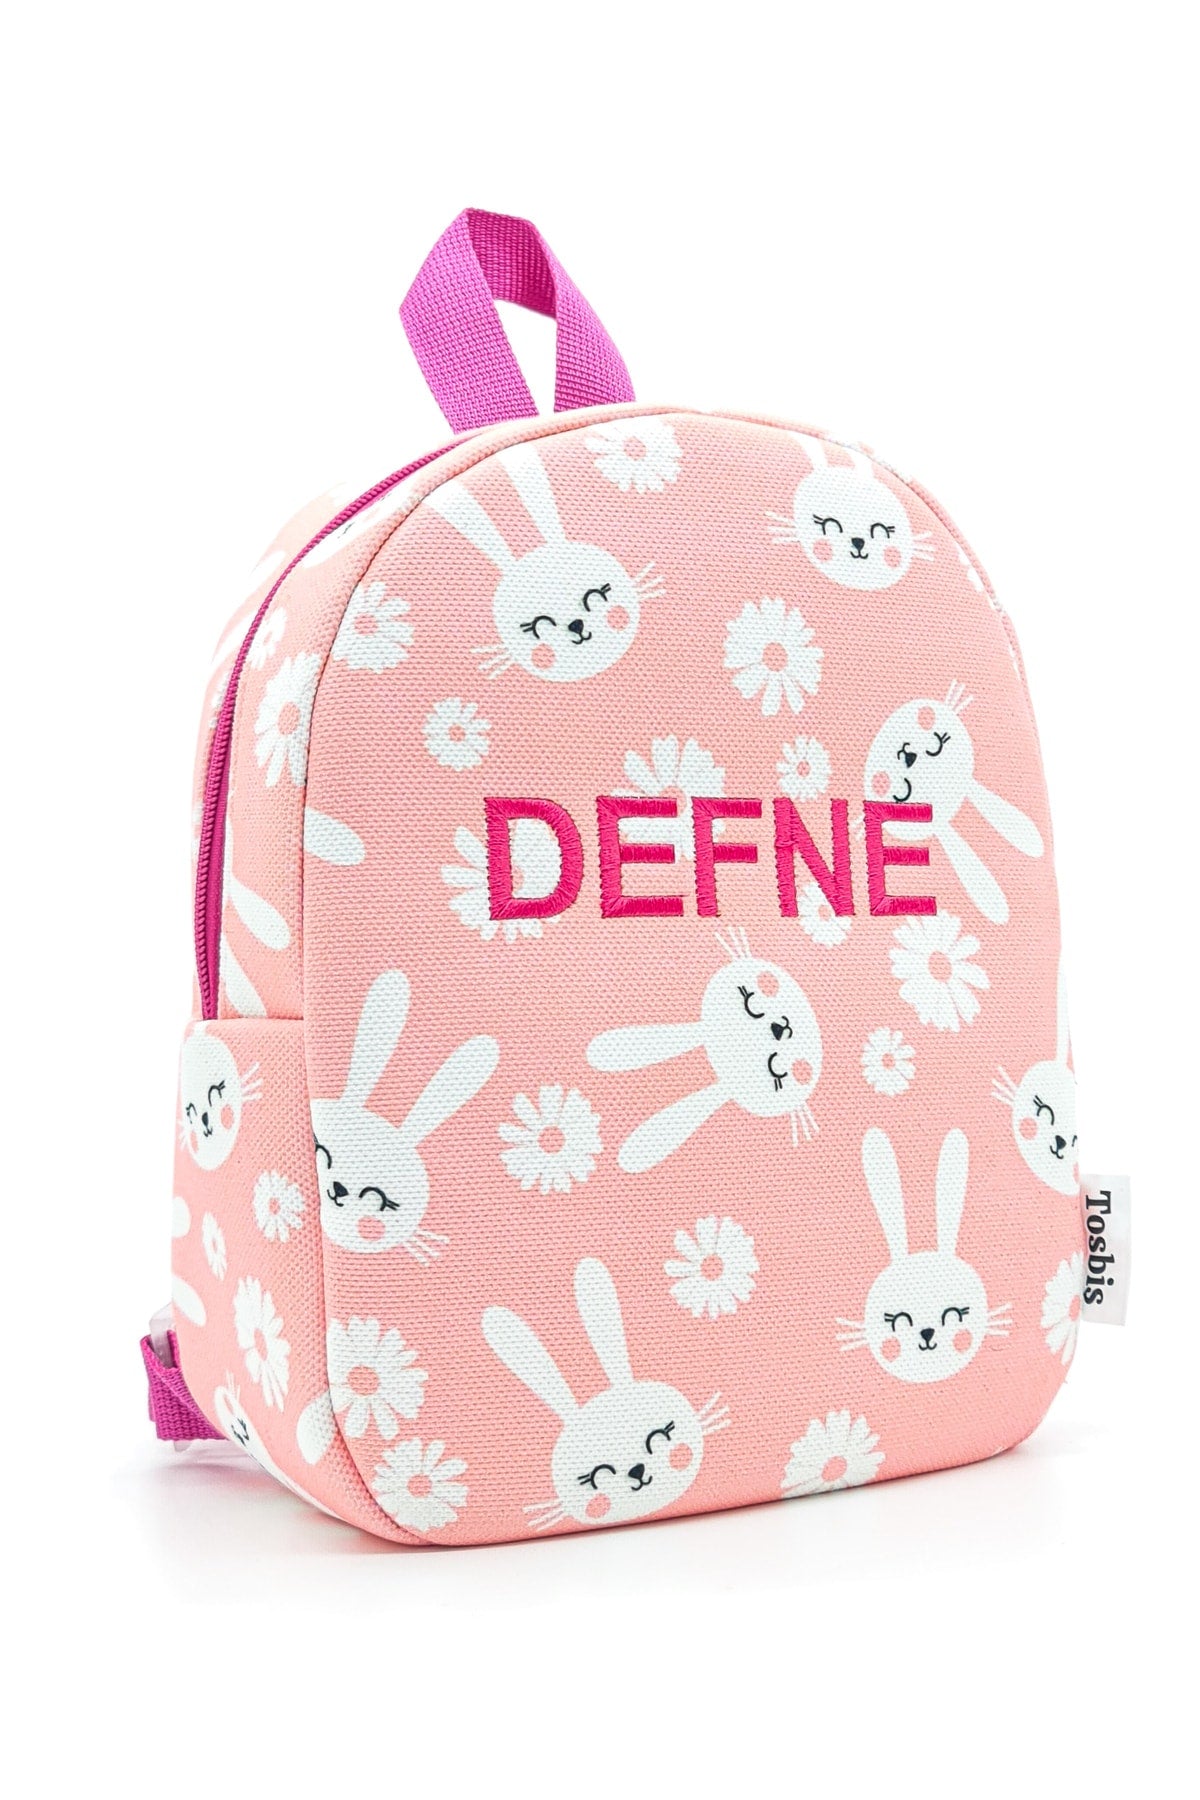 [ We Write The Name You Want ] Cute Rabbits 0-8 Years Old Children's Backpack, Kindergarten-Nursery Bag